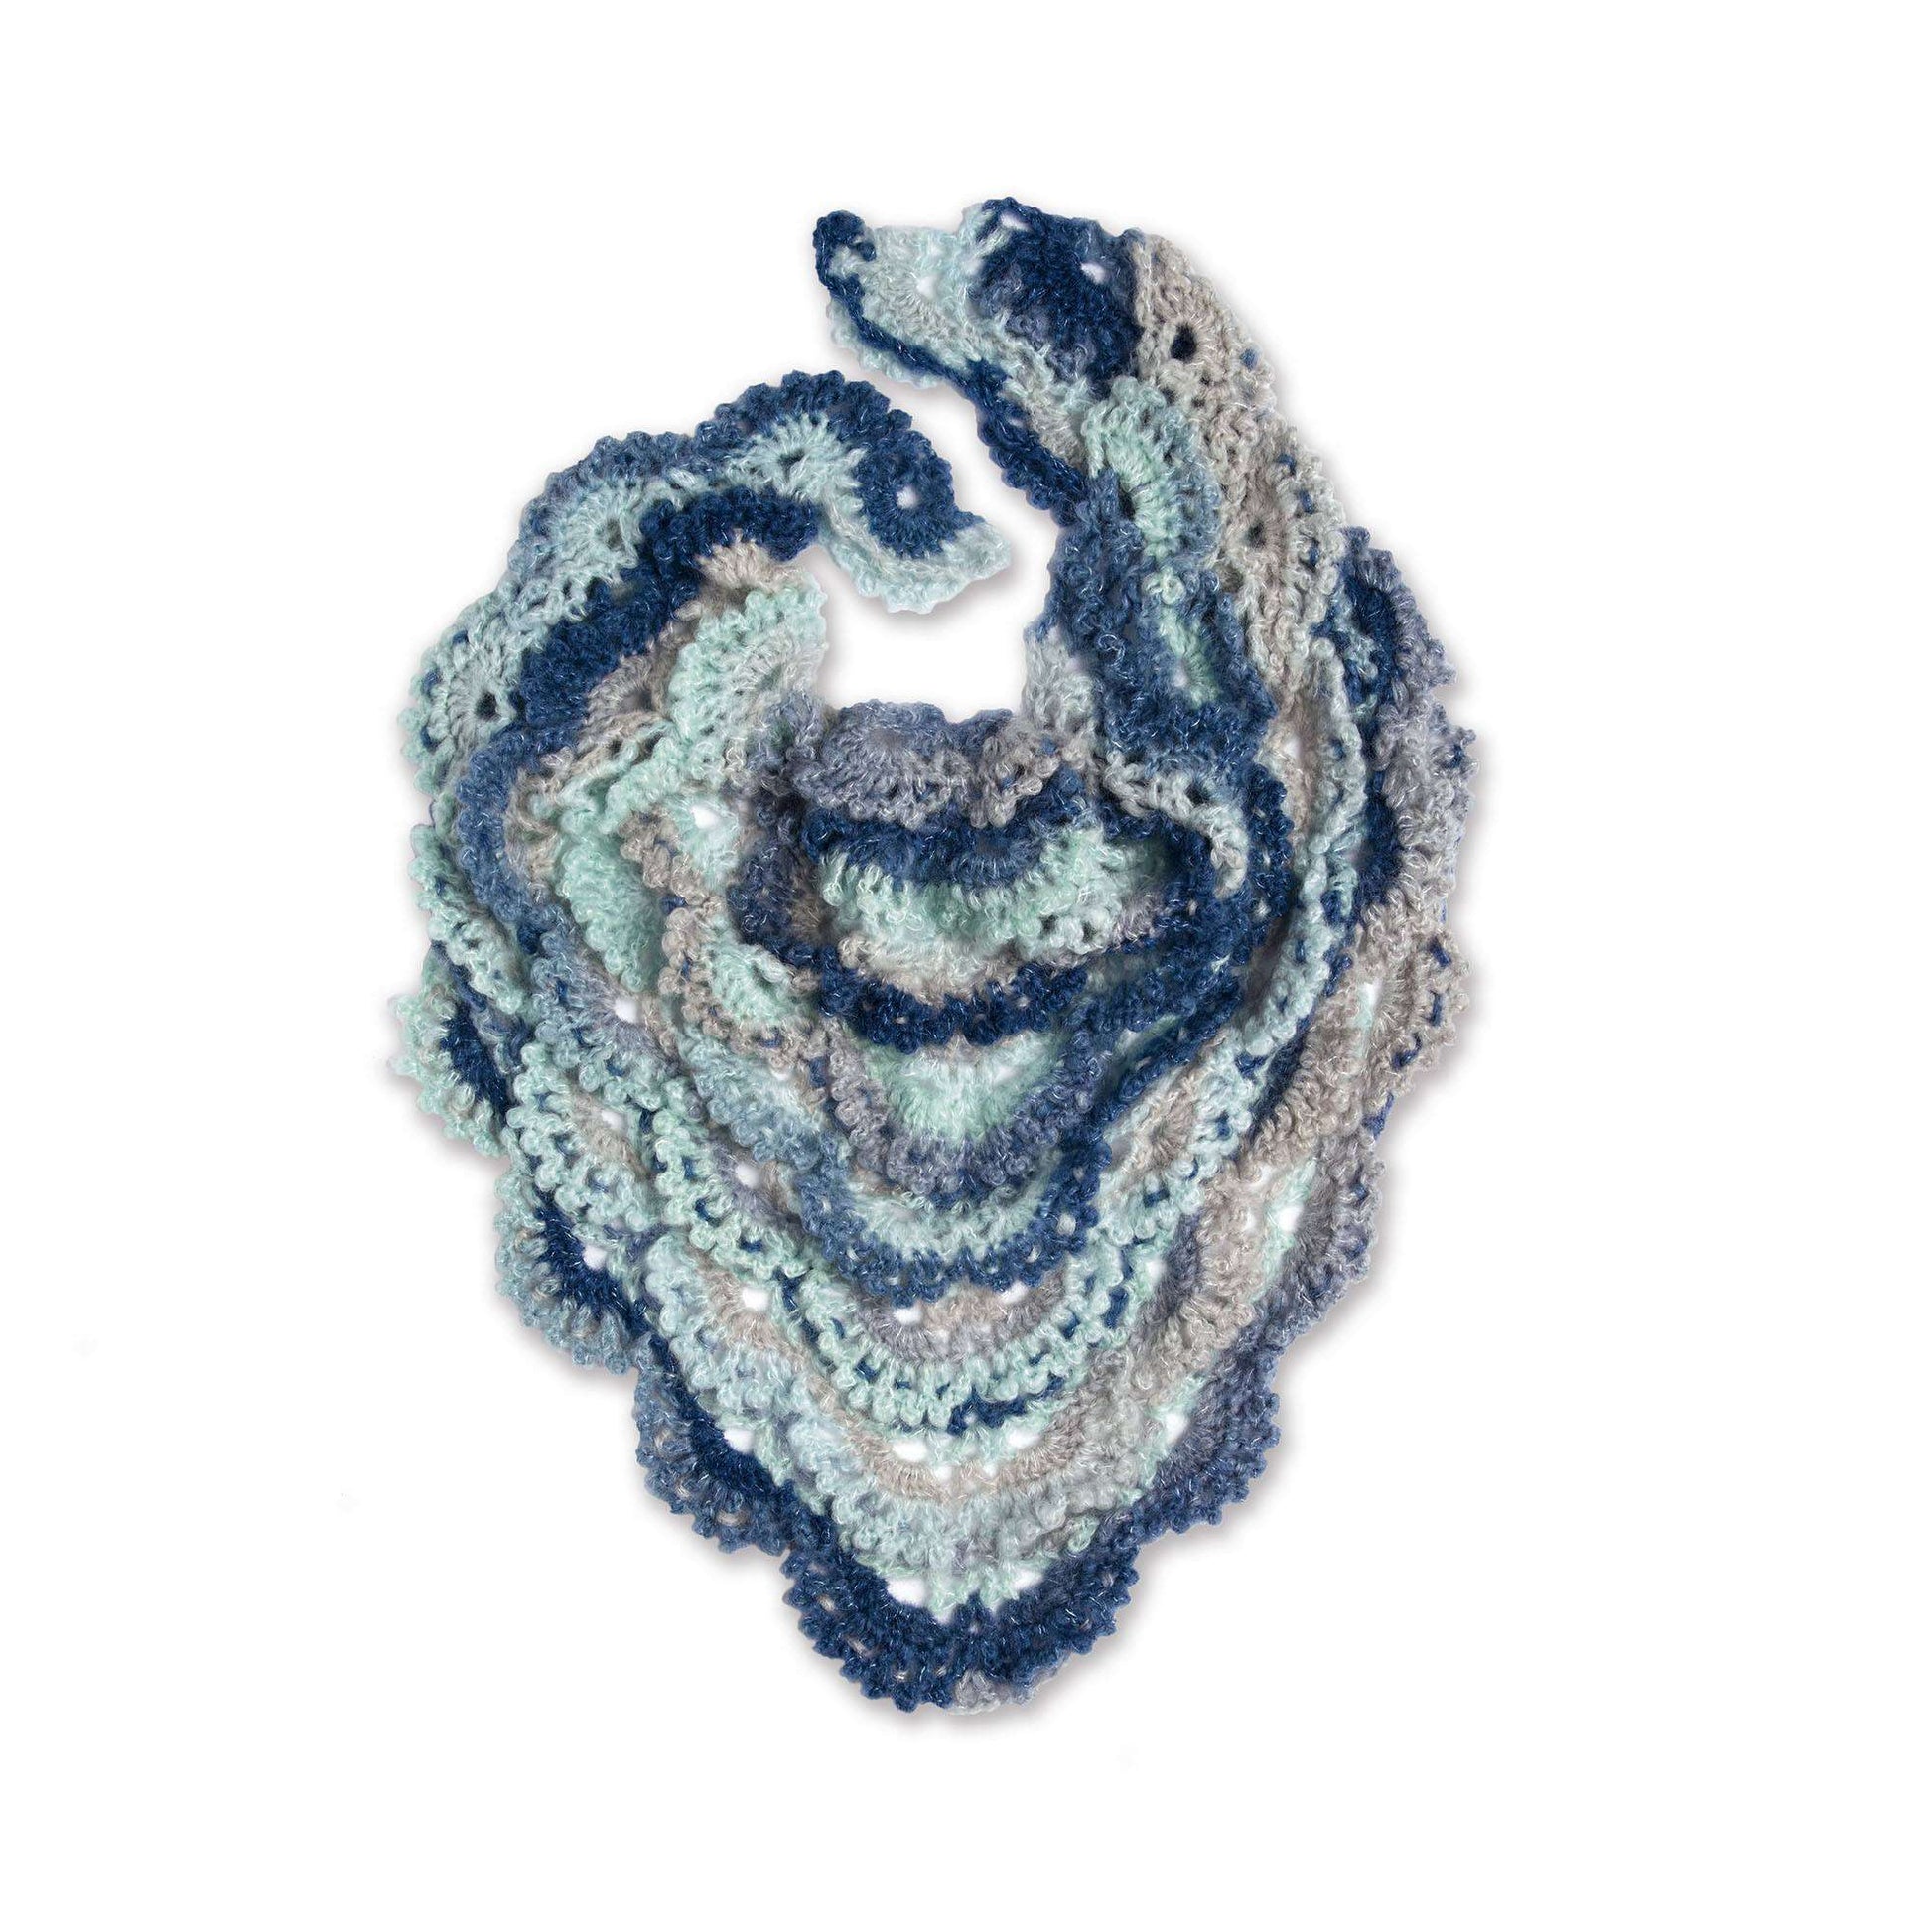 Bernat Crochet Shell Stitch Triangular Shawl Crochet Shawl made in Bernat Plentiful yarn